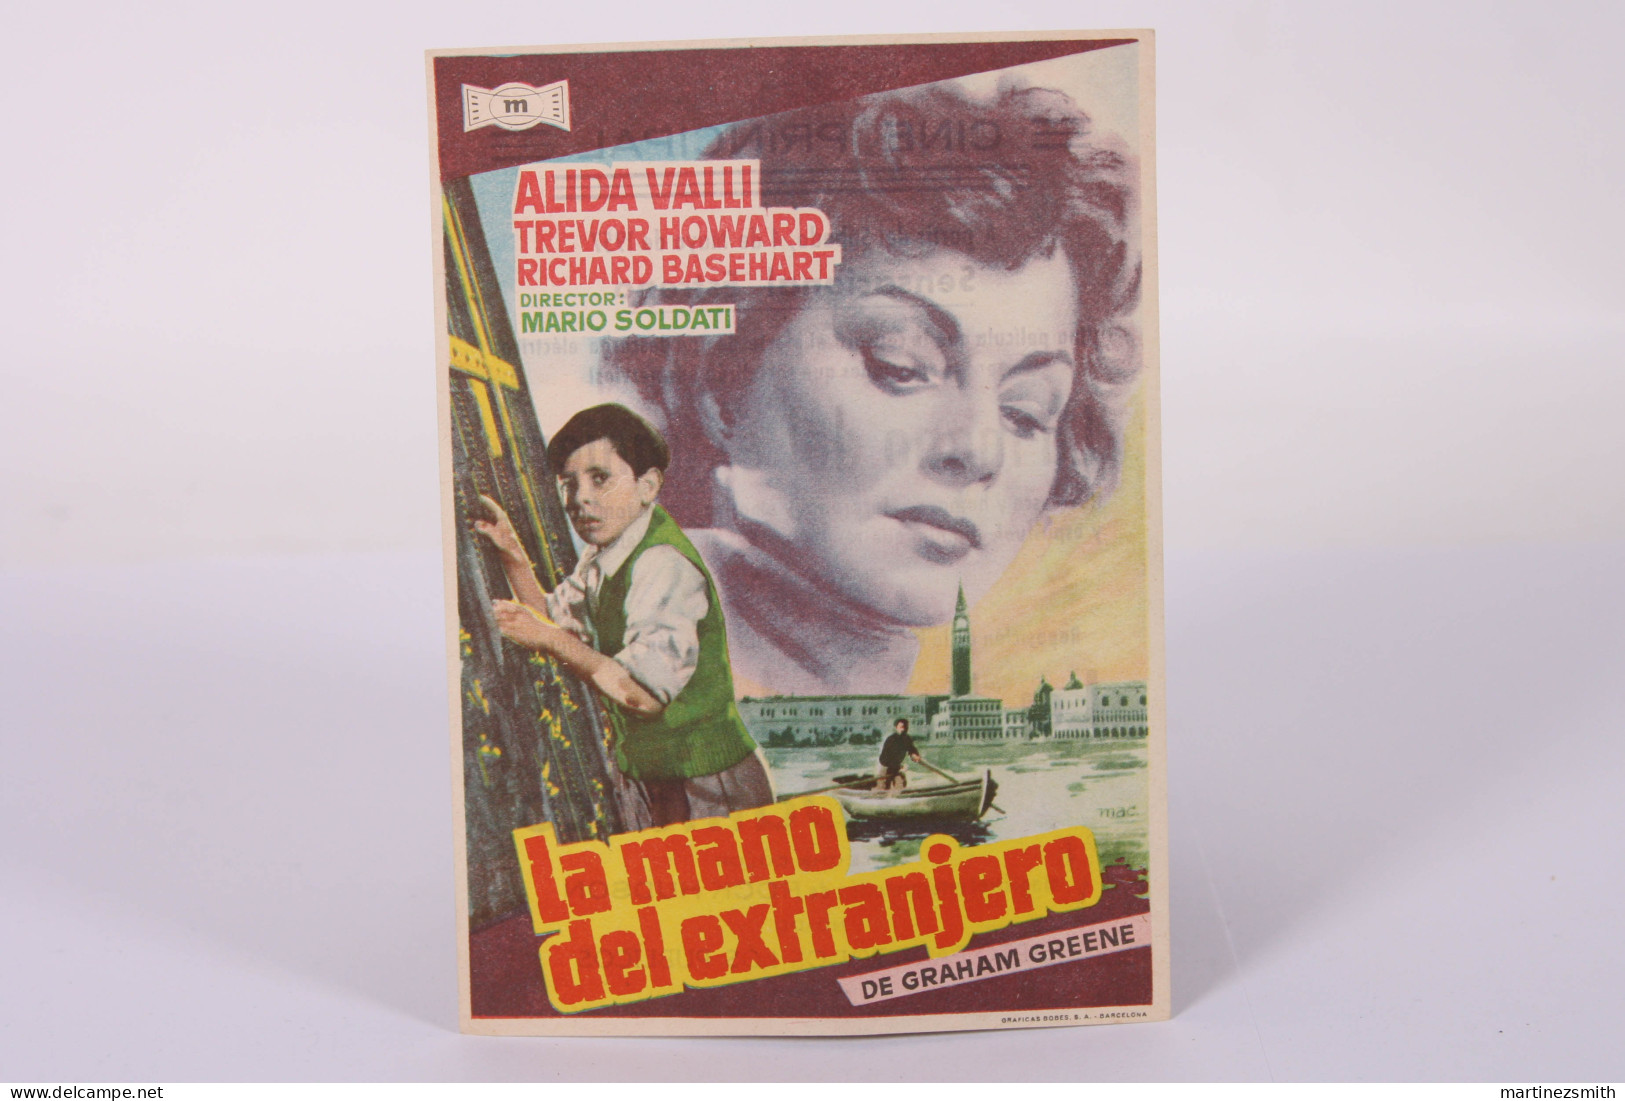 Original 1950's La Mano Dello Straniero / Movie Advt Brochure - Mario Soldati, Alida Valli, Revor Howard -15 X 11 Cm - Cinema Advertisement